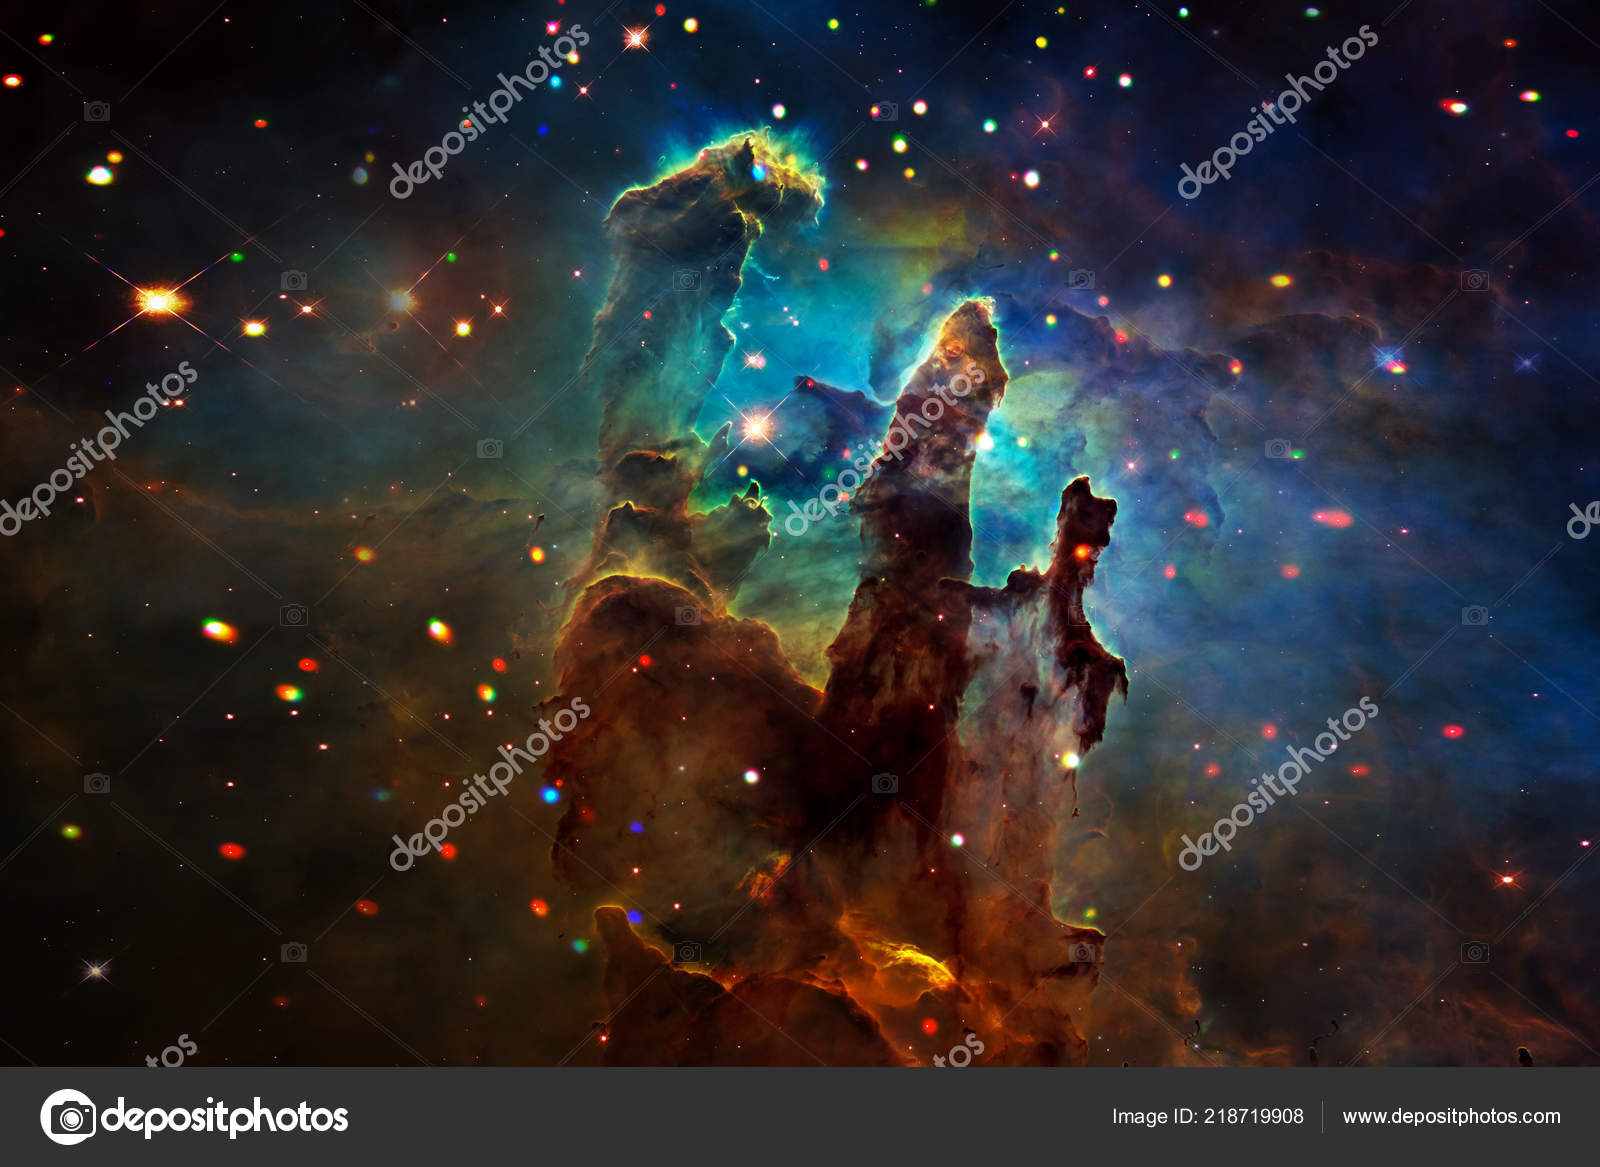 Landscape Fantasy Alien Planet Galaxy Background Elements Image